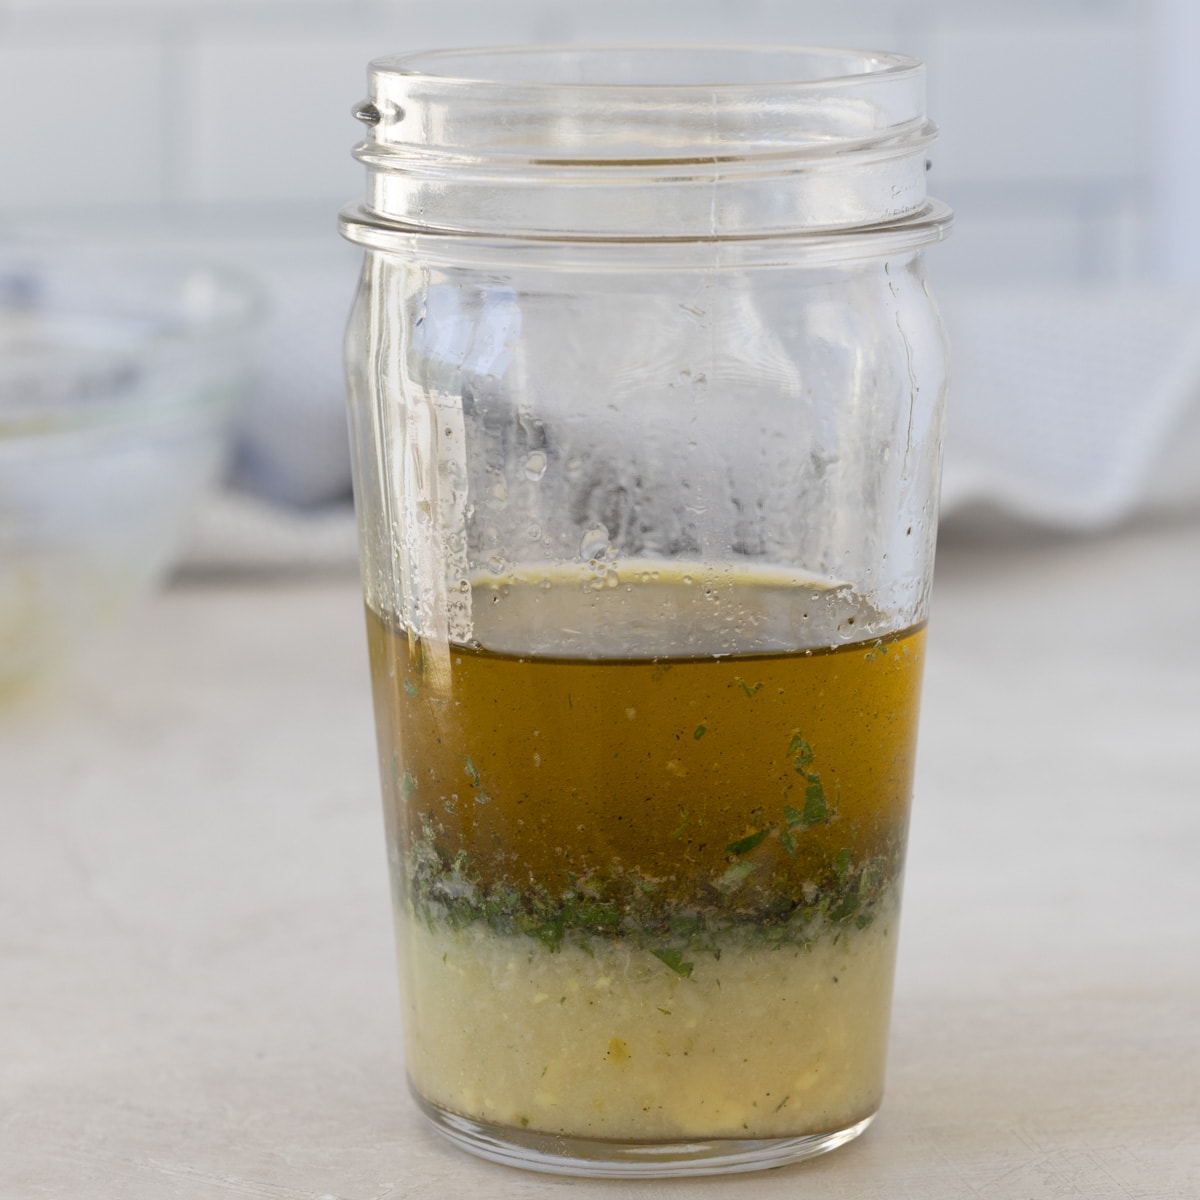 Lemon vinaigrette ingredients in a jar, not blended. 